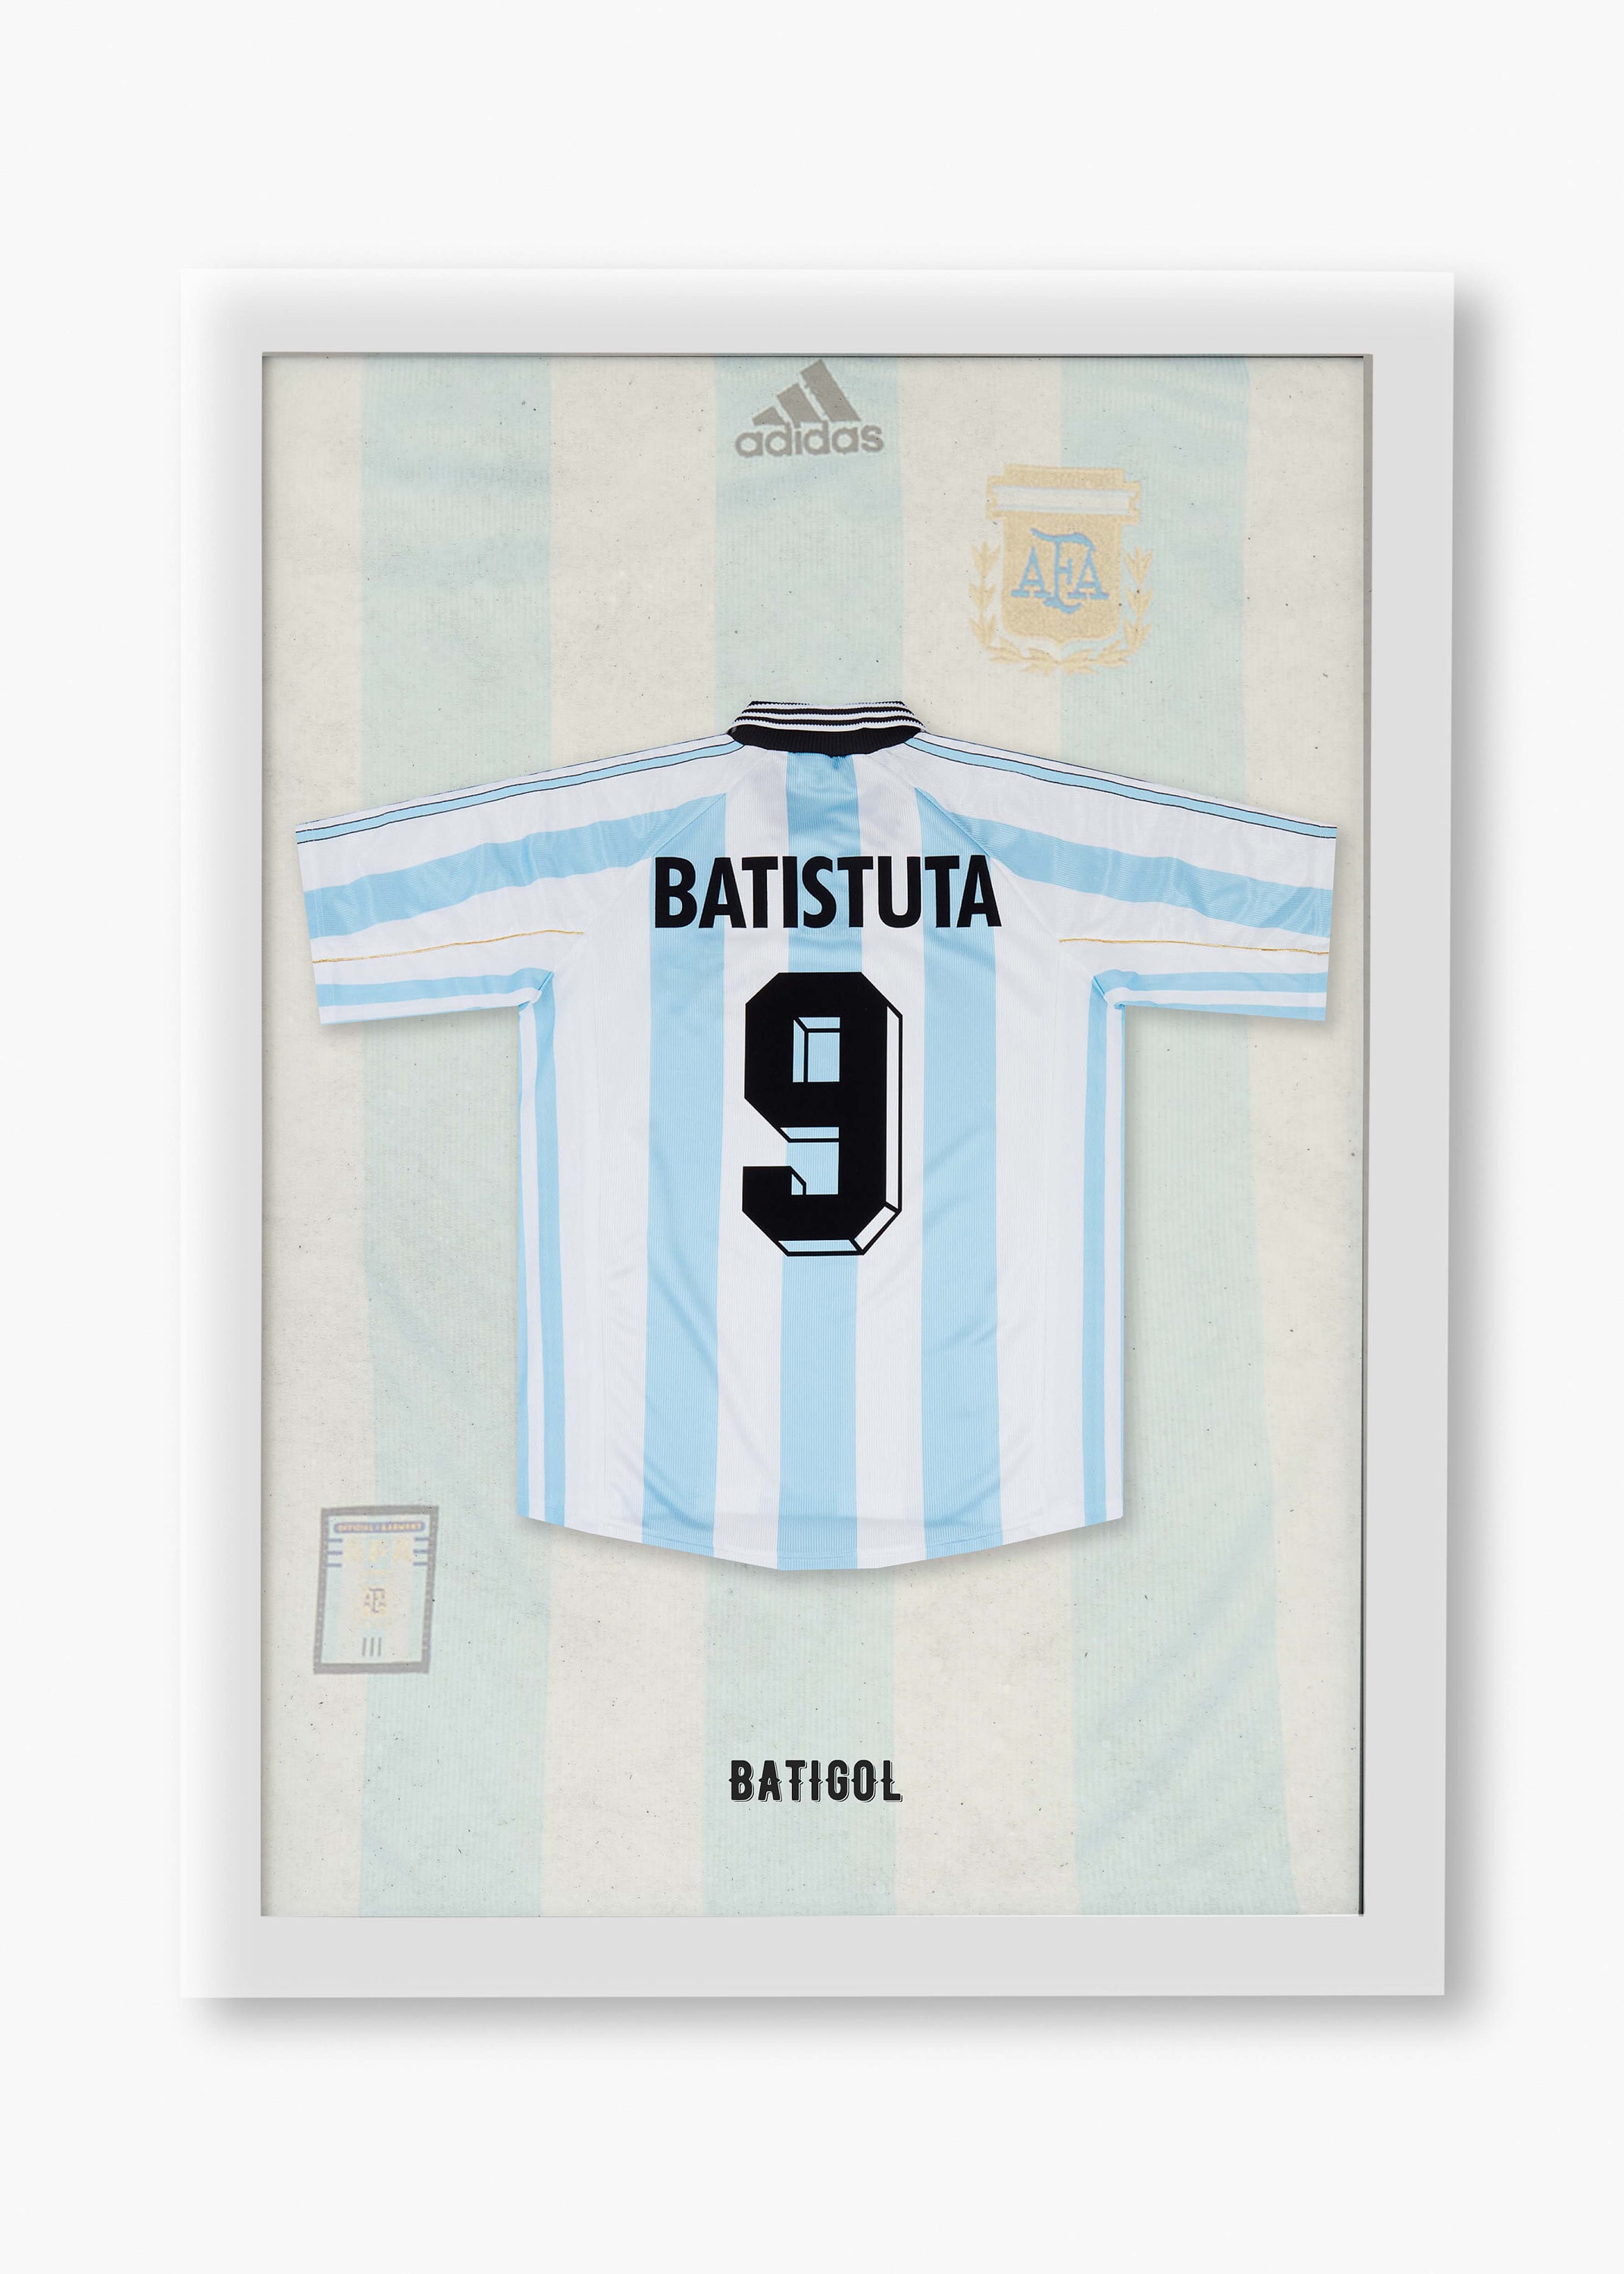 batistuta argentina jersey